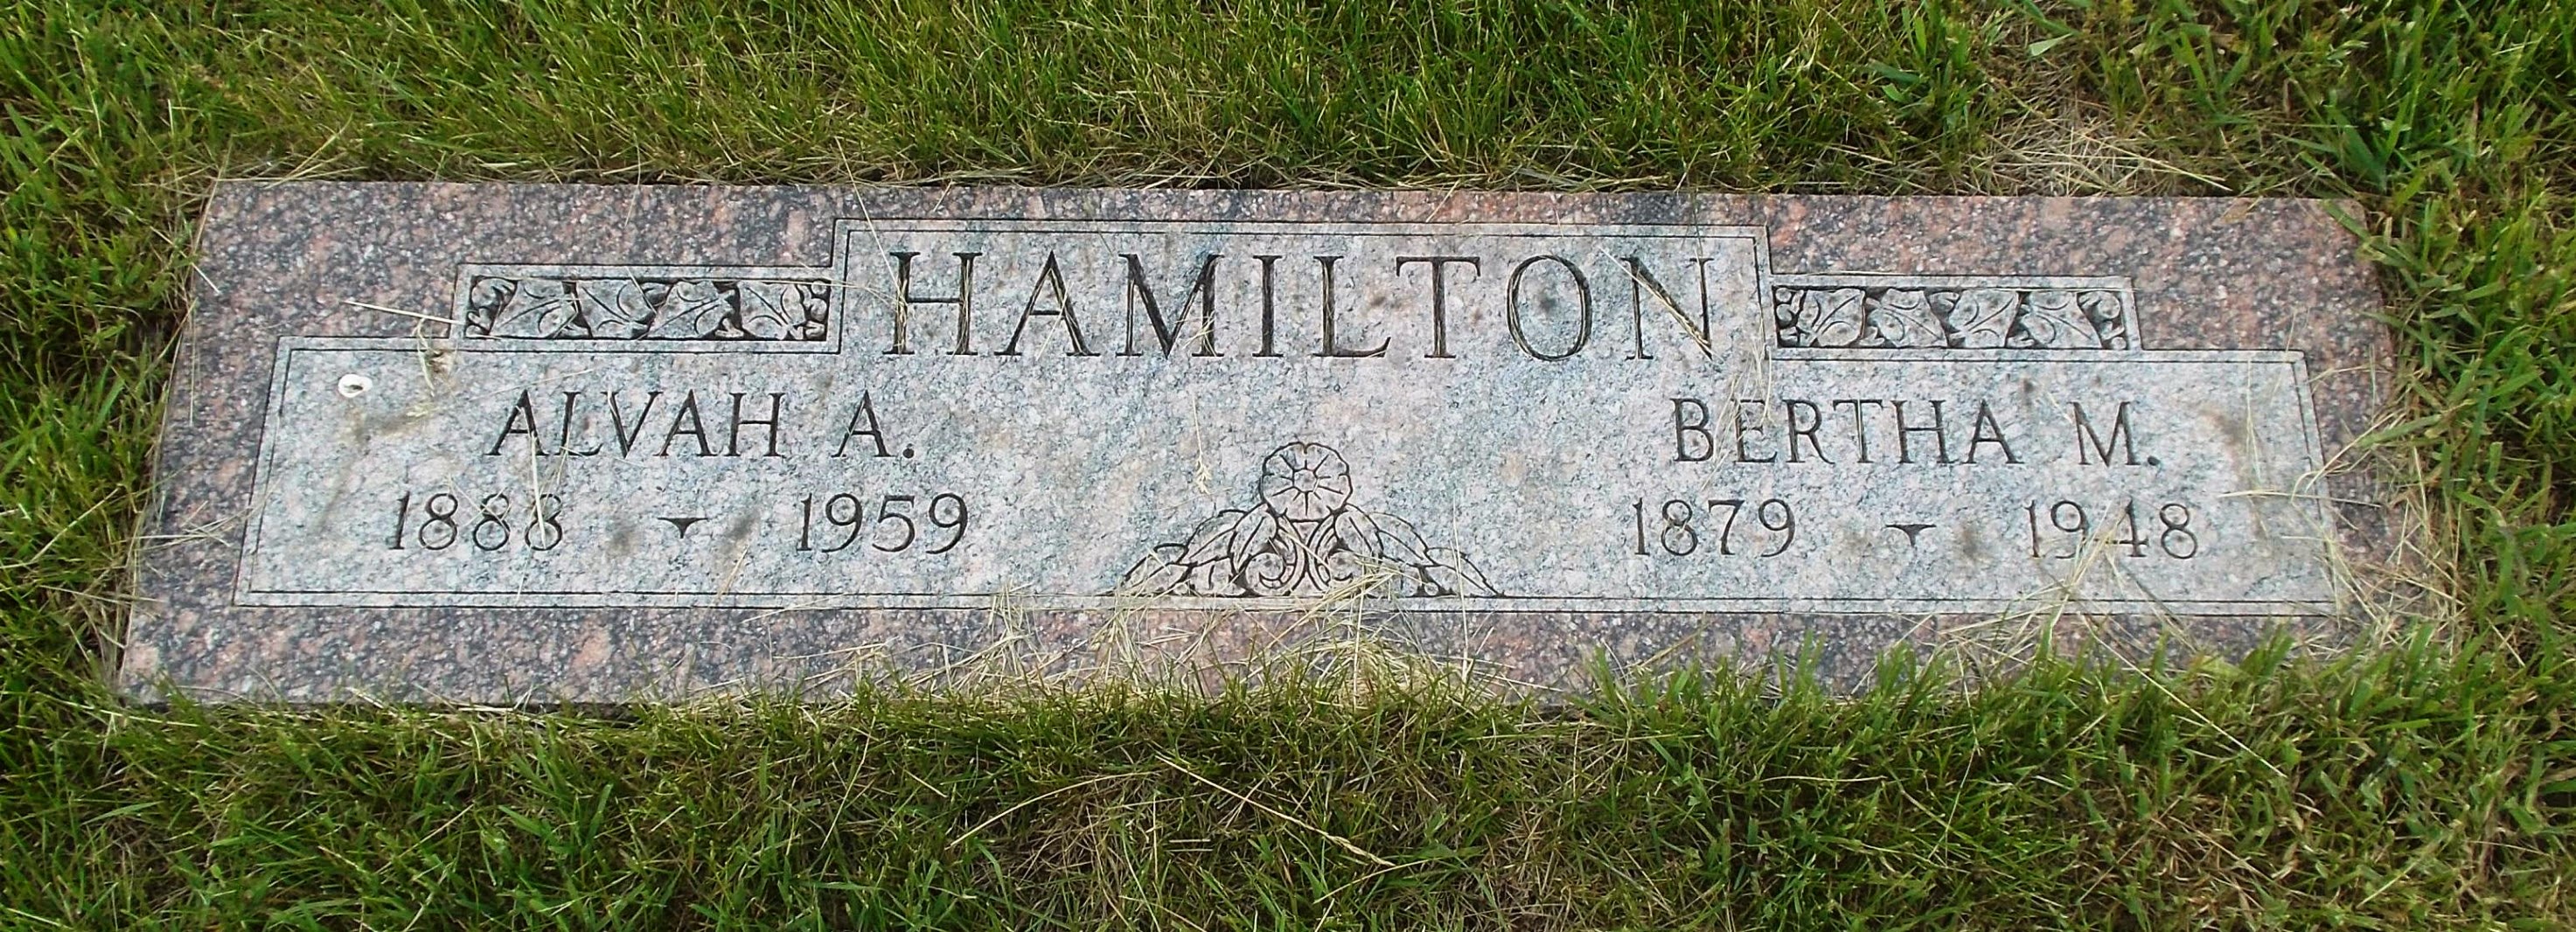 Bertha M Hamilton